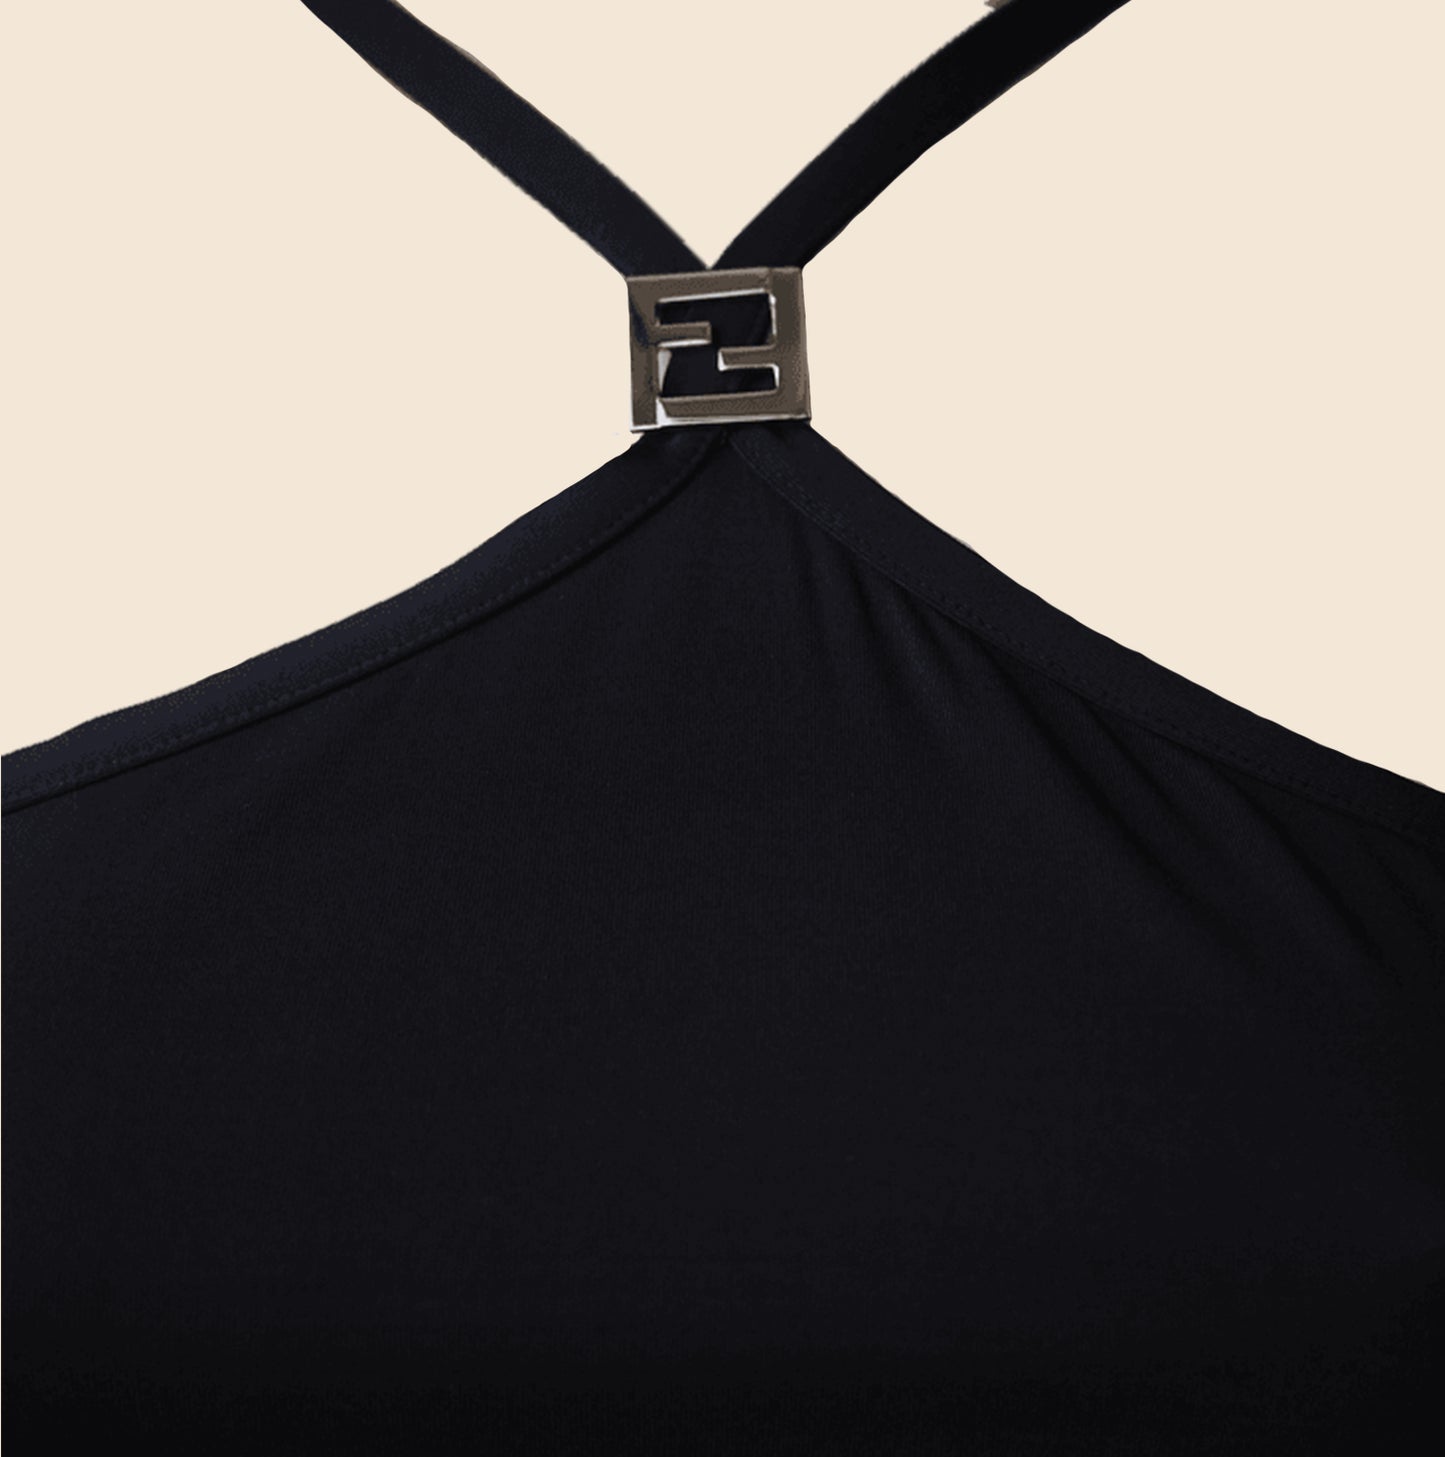 FENDI BY KARL LAGERFELD BLACK LYCRA MAXI DRESS